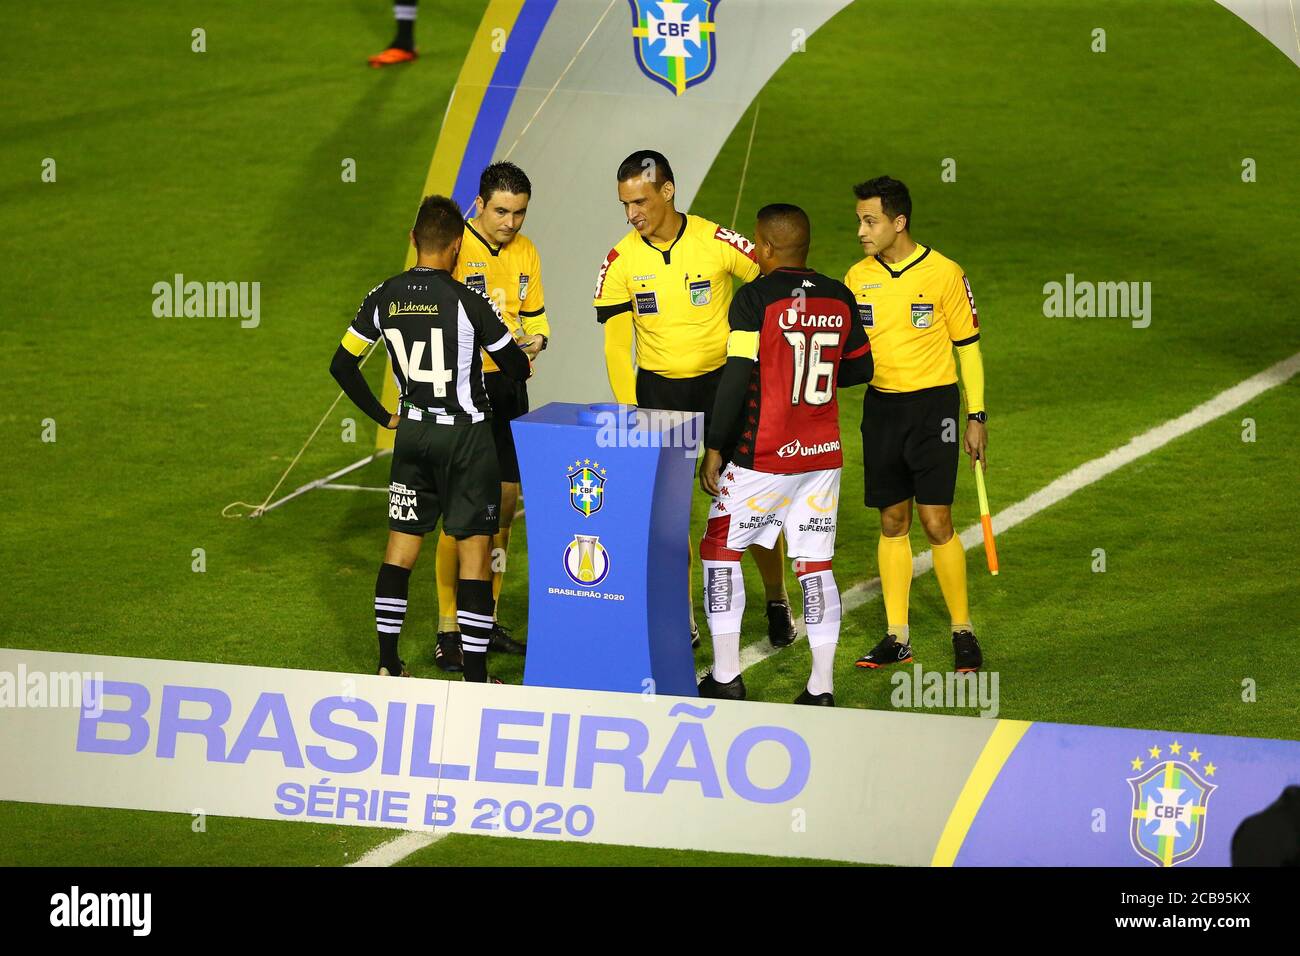 Campeonato Brasileiro de Futebol - Série B - Campeonato Brasileiro